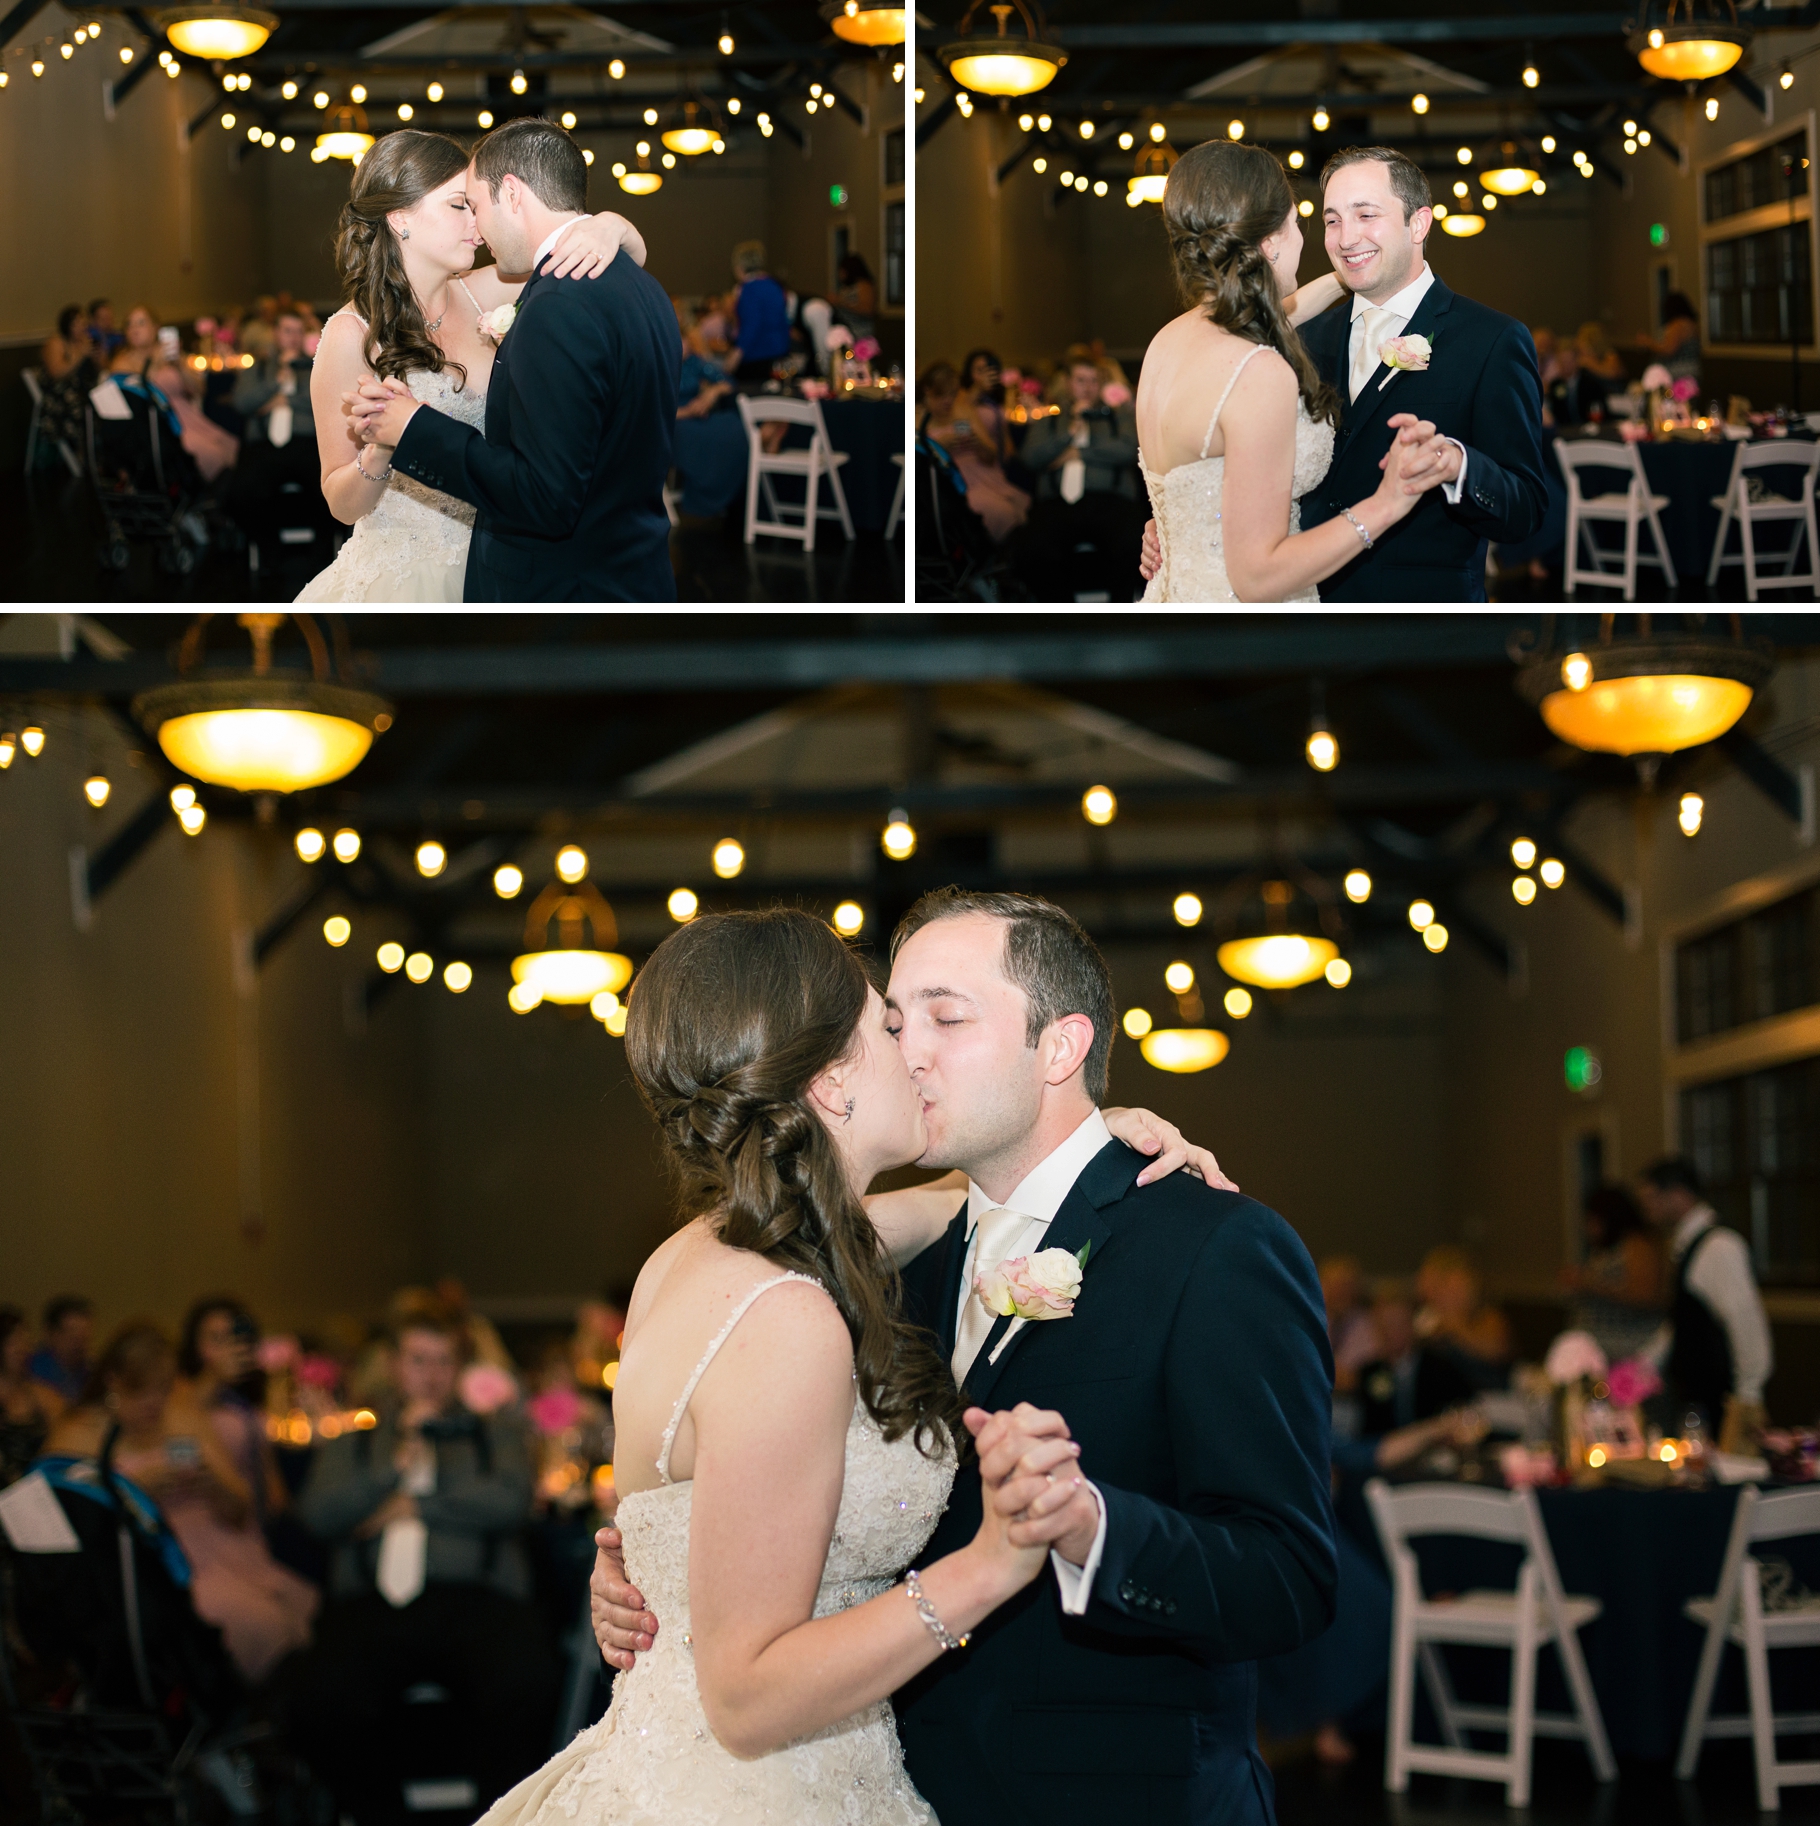 45-Reception-Bride-Groom-First-Dance-Hidden-Meadows-Snohomish-Wedding-Photographer-Northwest-Seattle-Photography-by-Betty-Elaine